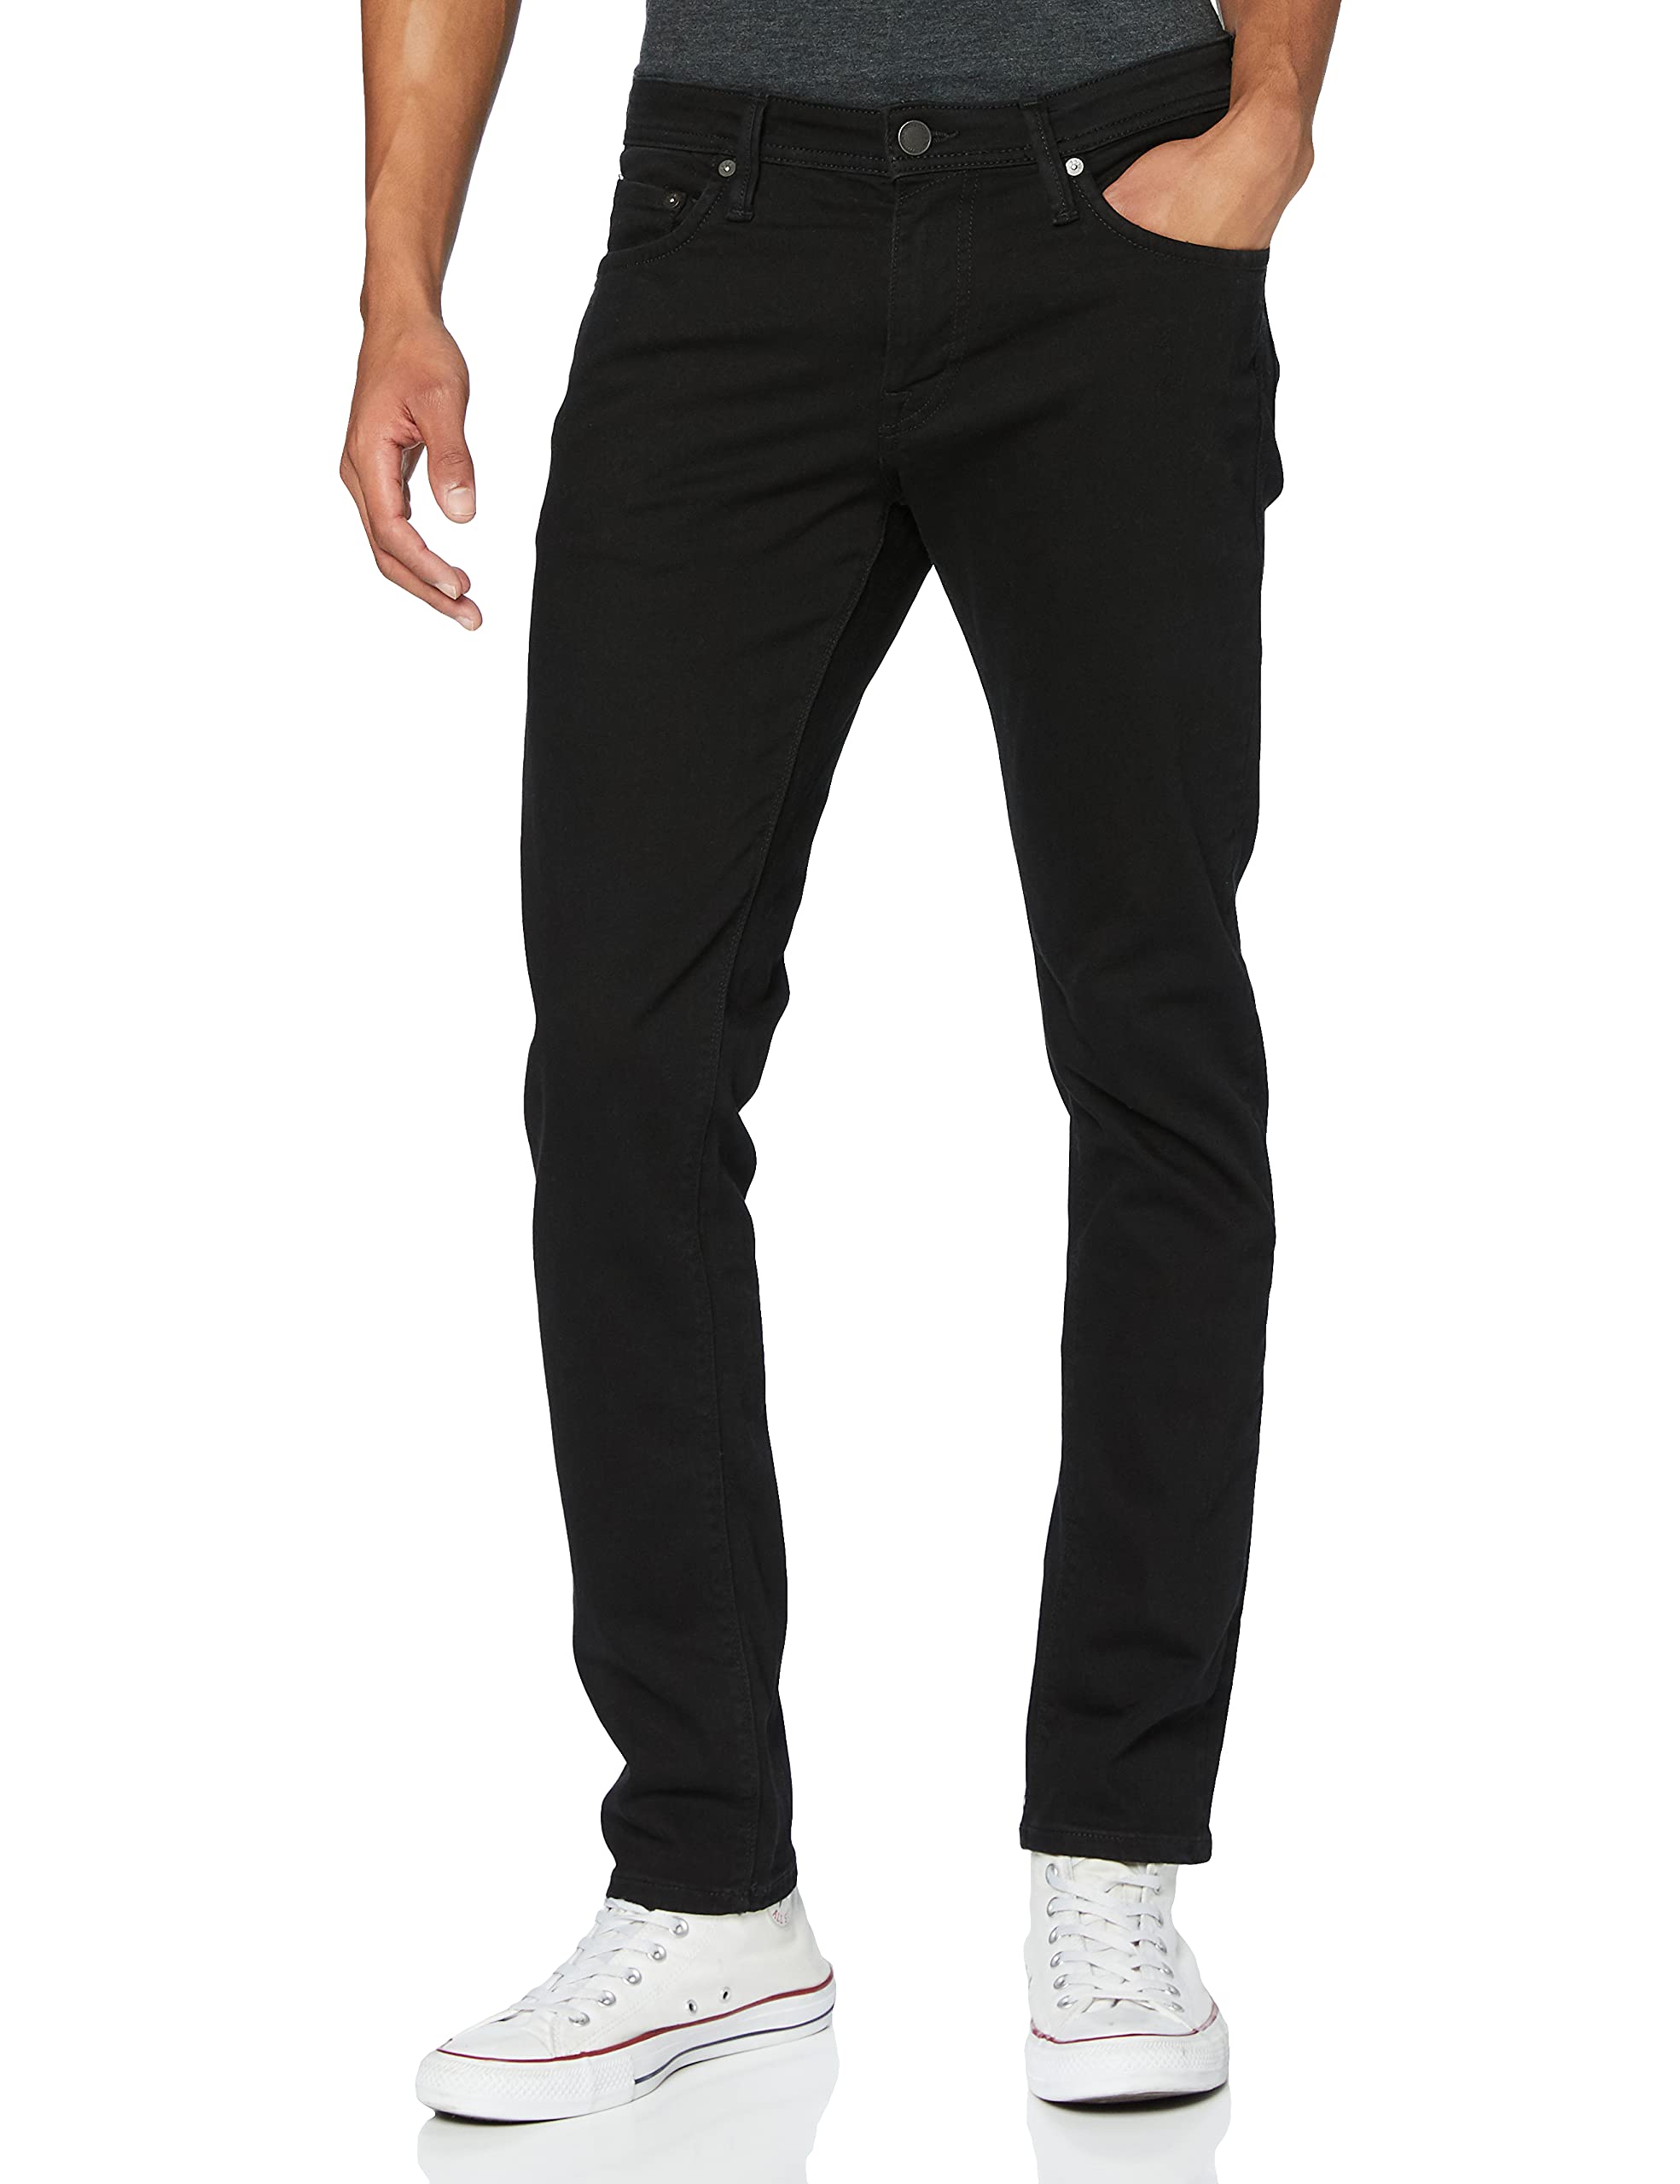 JACK & JONES Jeans Slim Fit Stretch Low Rise Hose mit Knöpfen und Reißverschluss JJIGLENN JJFELIX, Farben:Schwarz,Größe Jeans:W33 L32,Z - Länge L30/32/34/36/38:L32